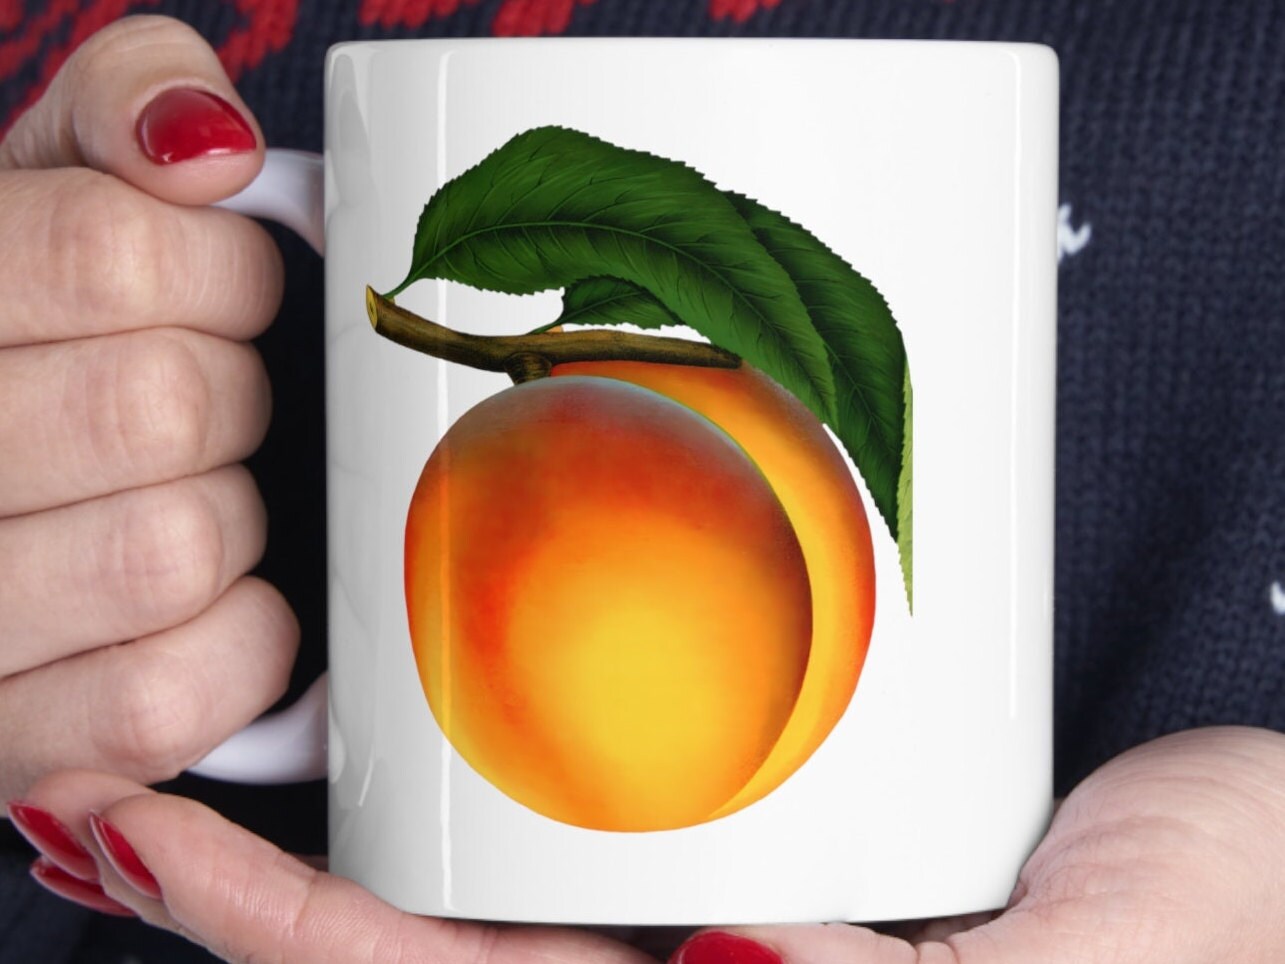 Elberta Peach Block Print Fruit Linocut Black and White Print